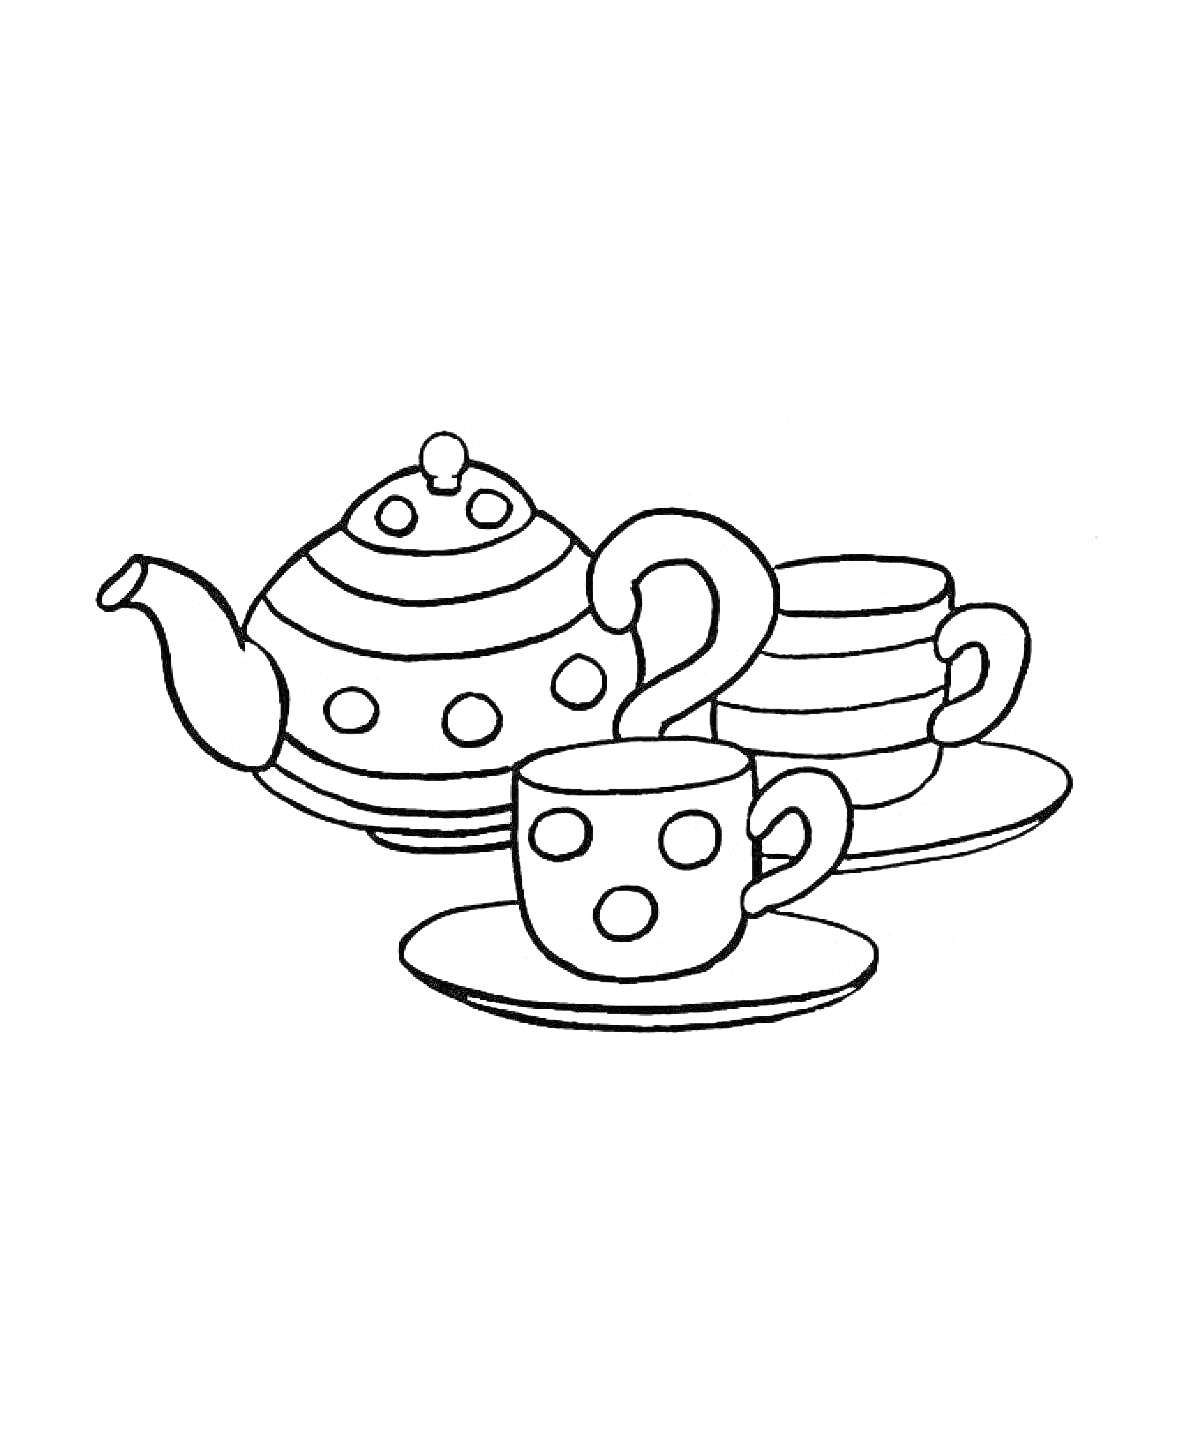 Раскраска Чайник с кружками на блюдцах